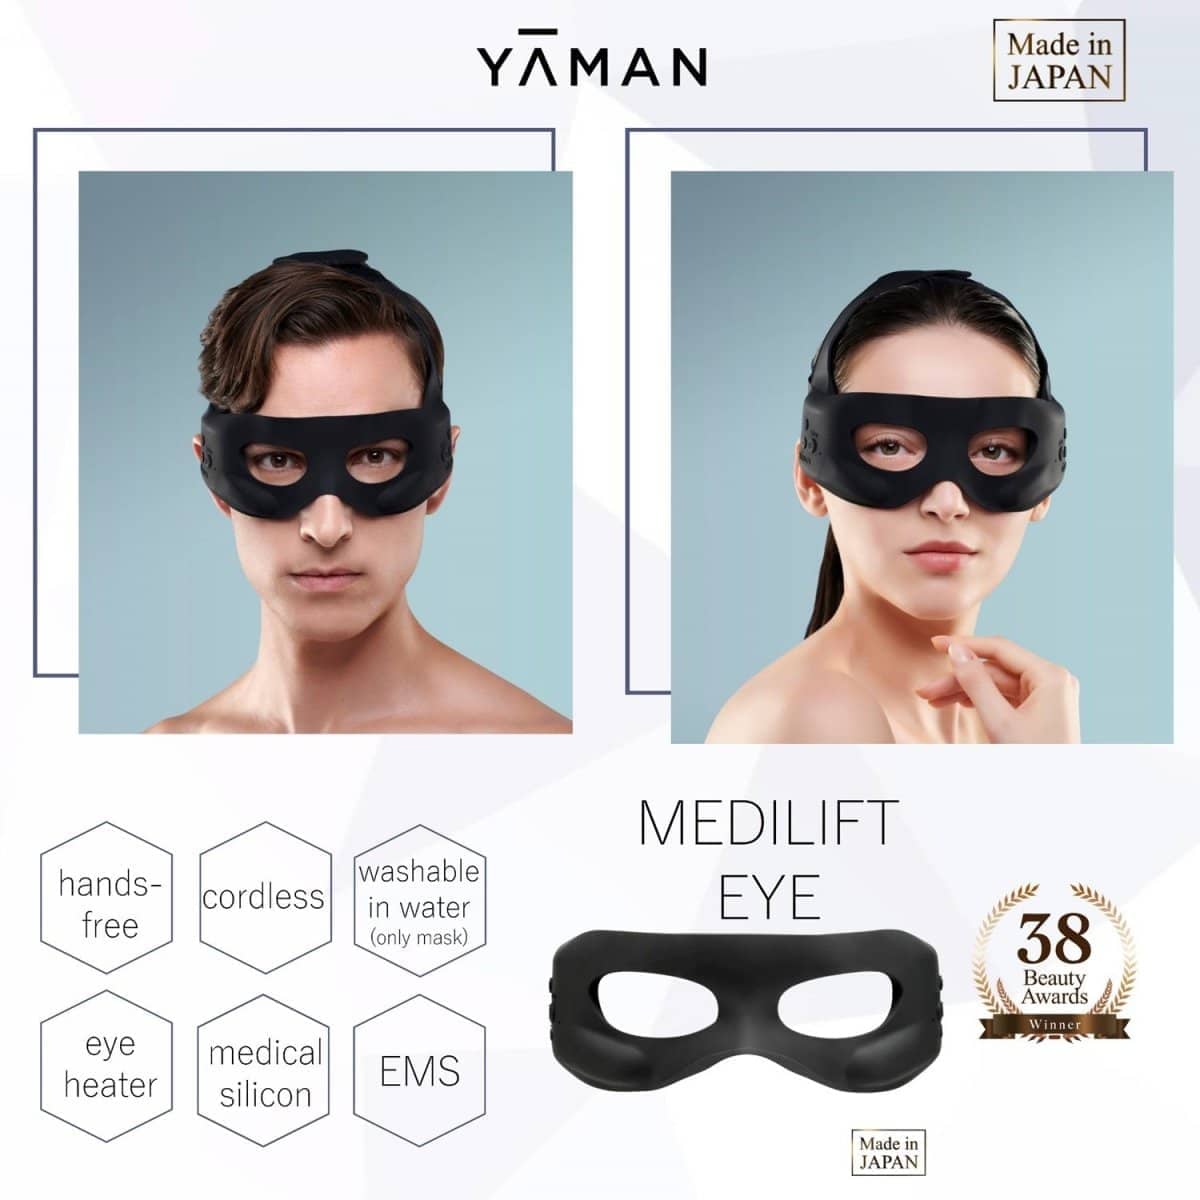 Ya-Man Medilift Eye Yaman - Toottoot SG